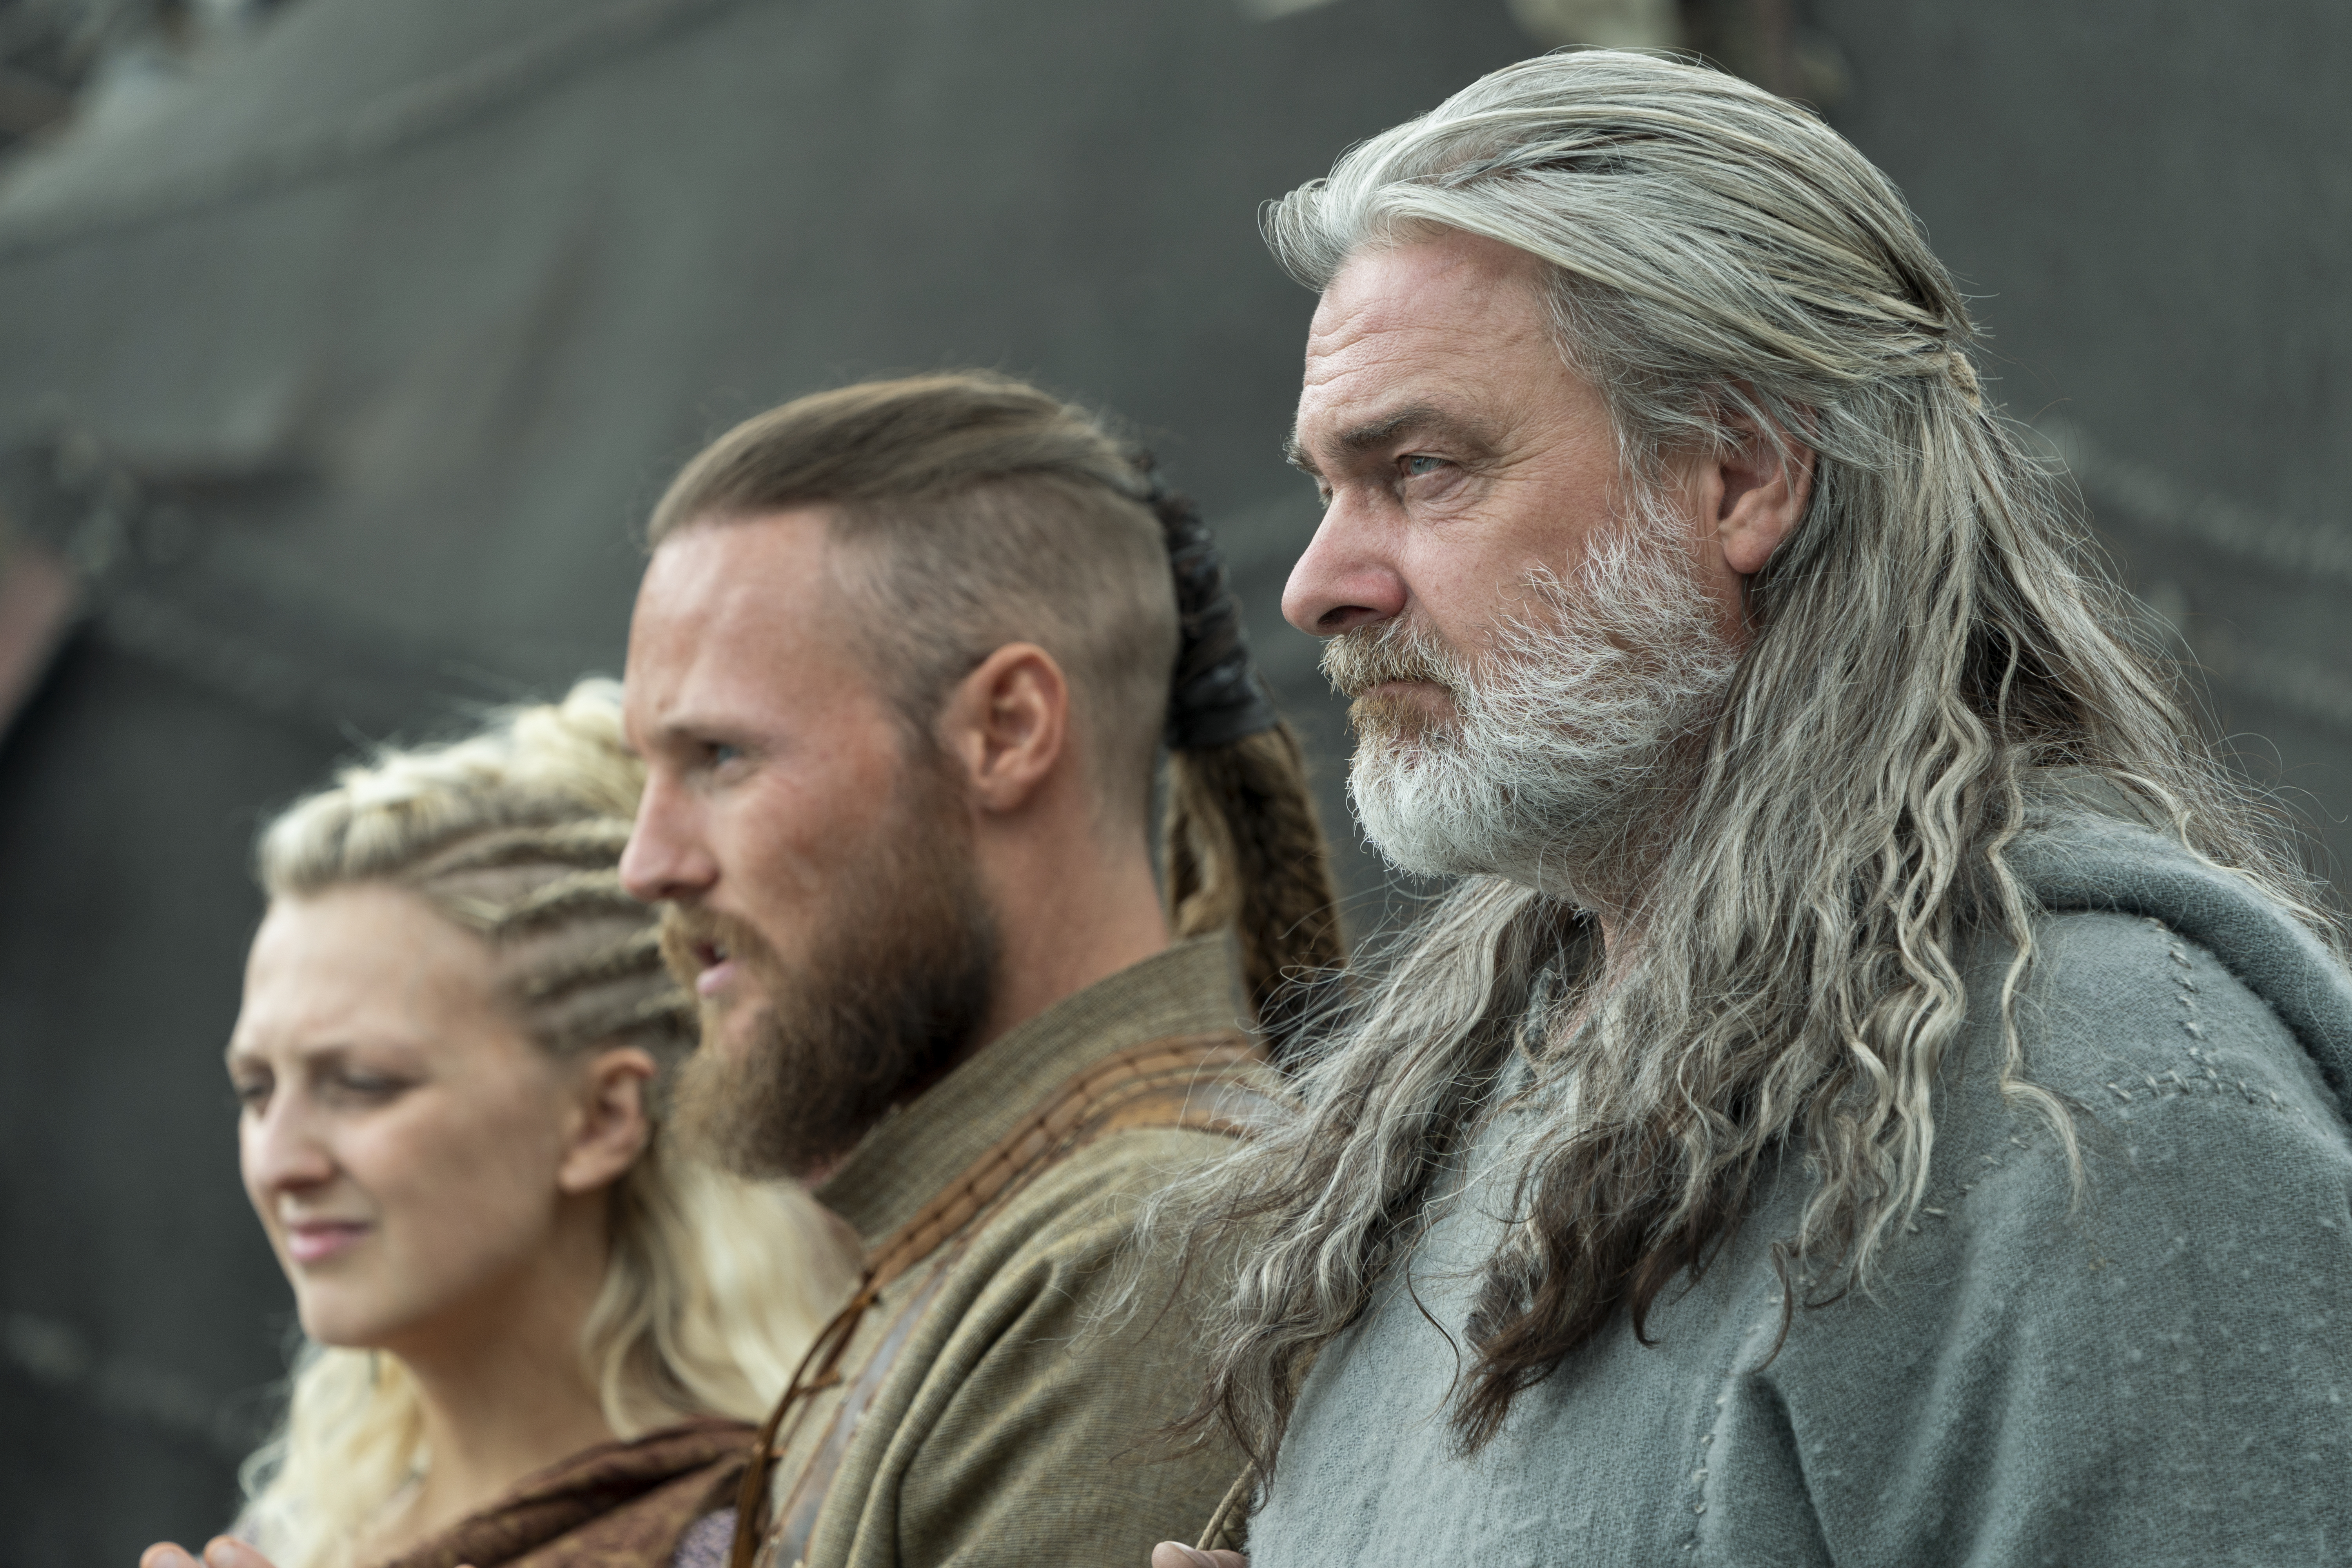 Vikings' actors who played Bjorn and Torvi reunite